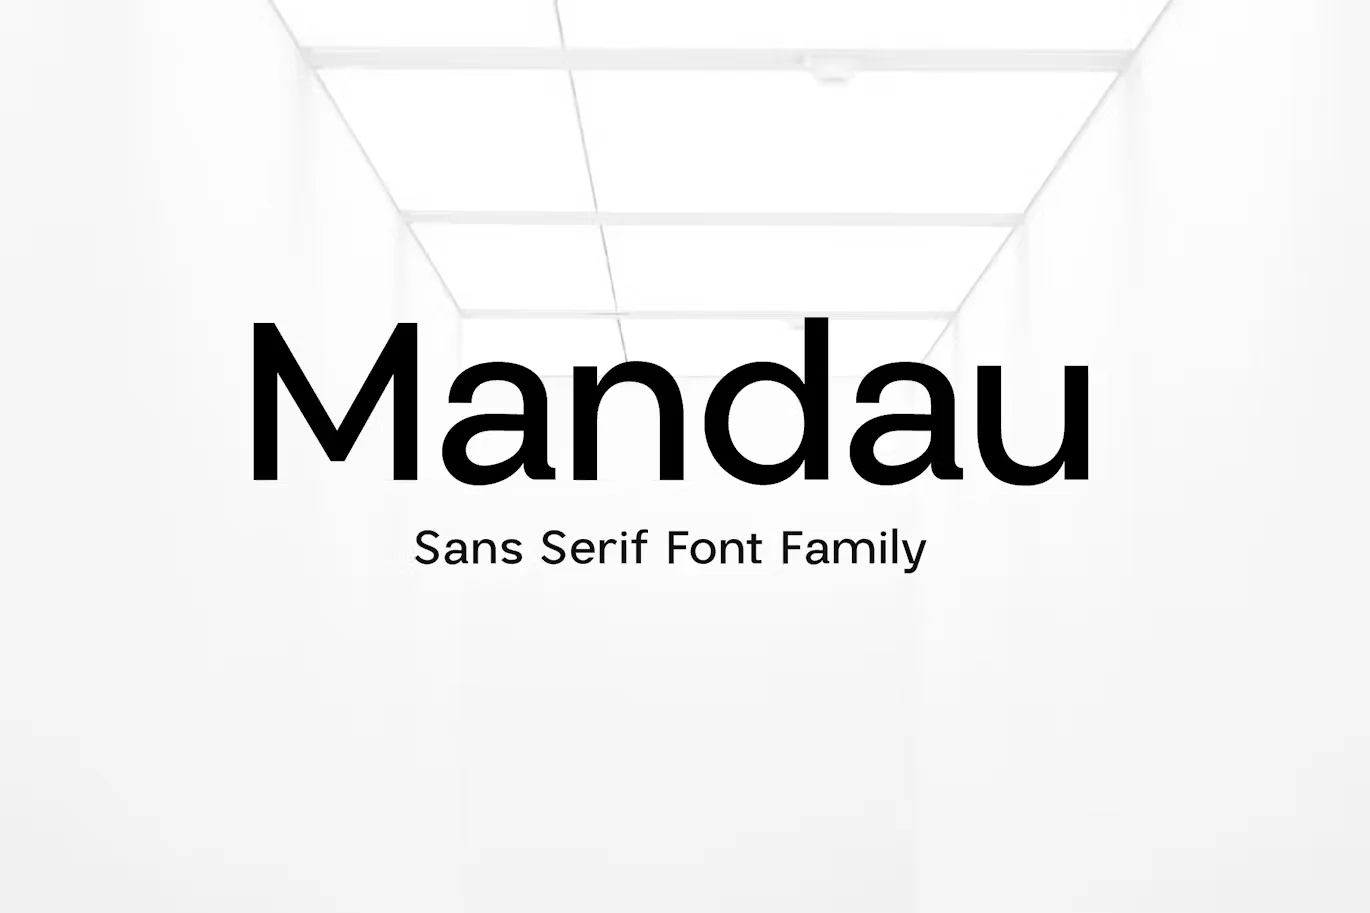 Mandau Sans Serif Font Family